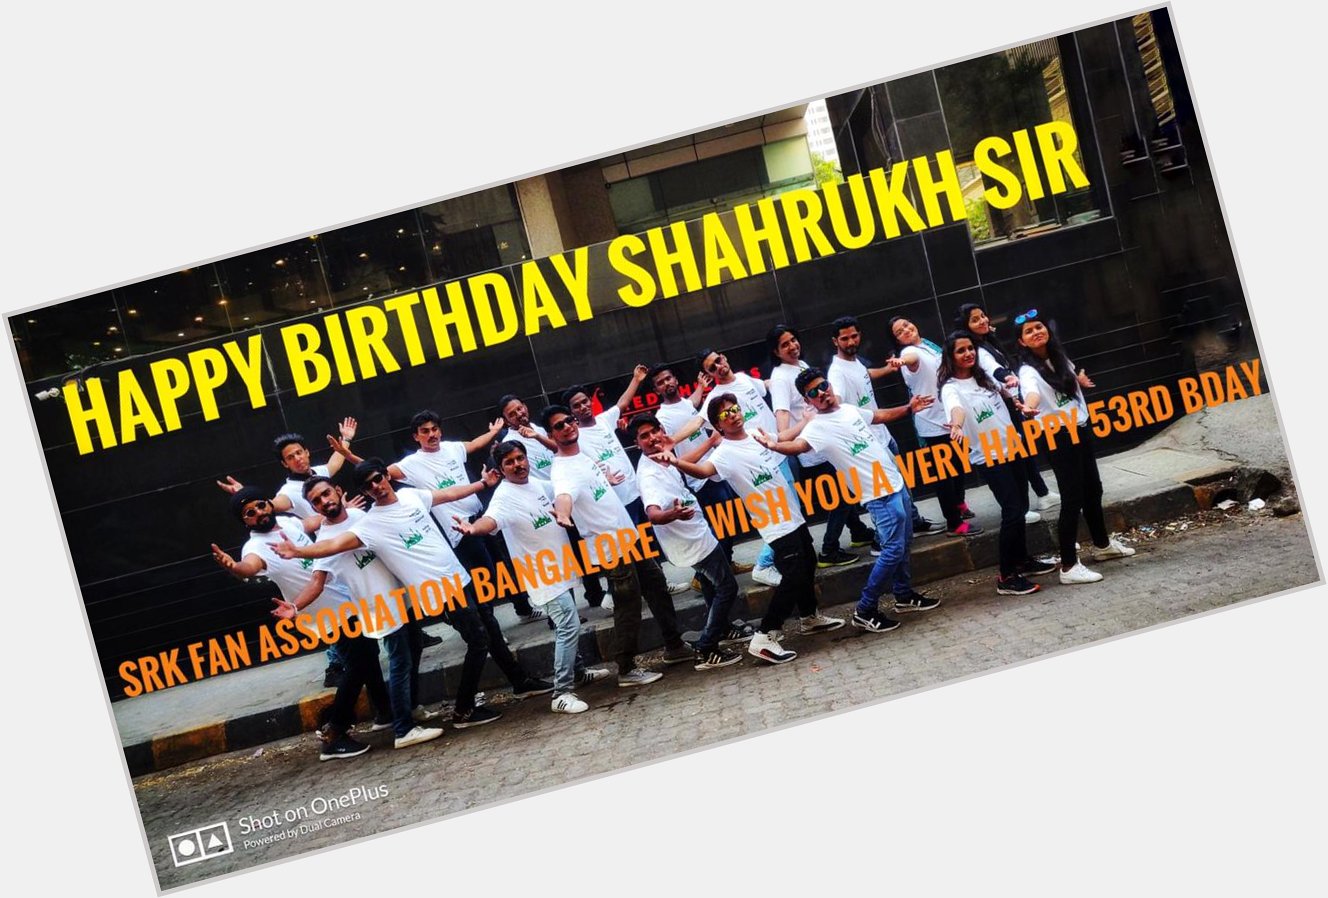 Happy birthday shahrukh khan sir  many many more happy returns of the day sir     